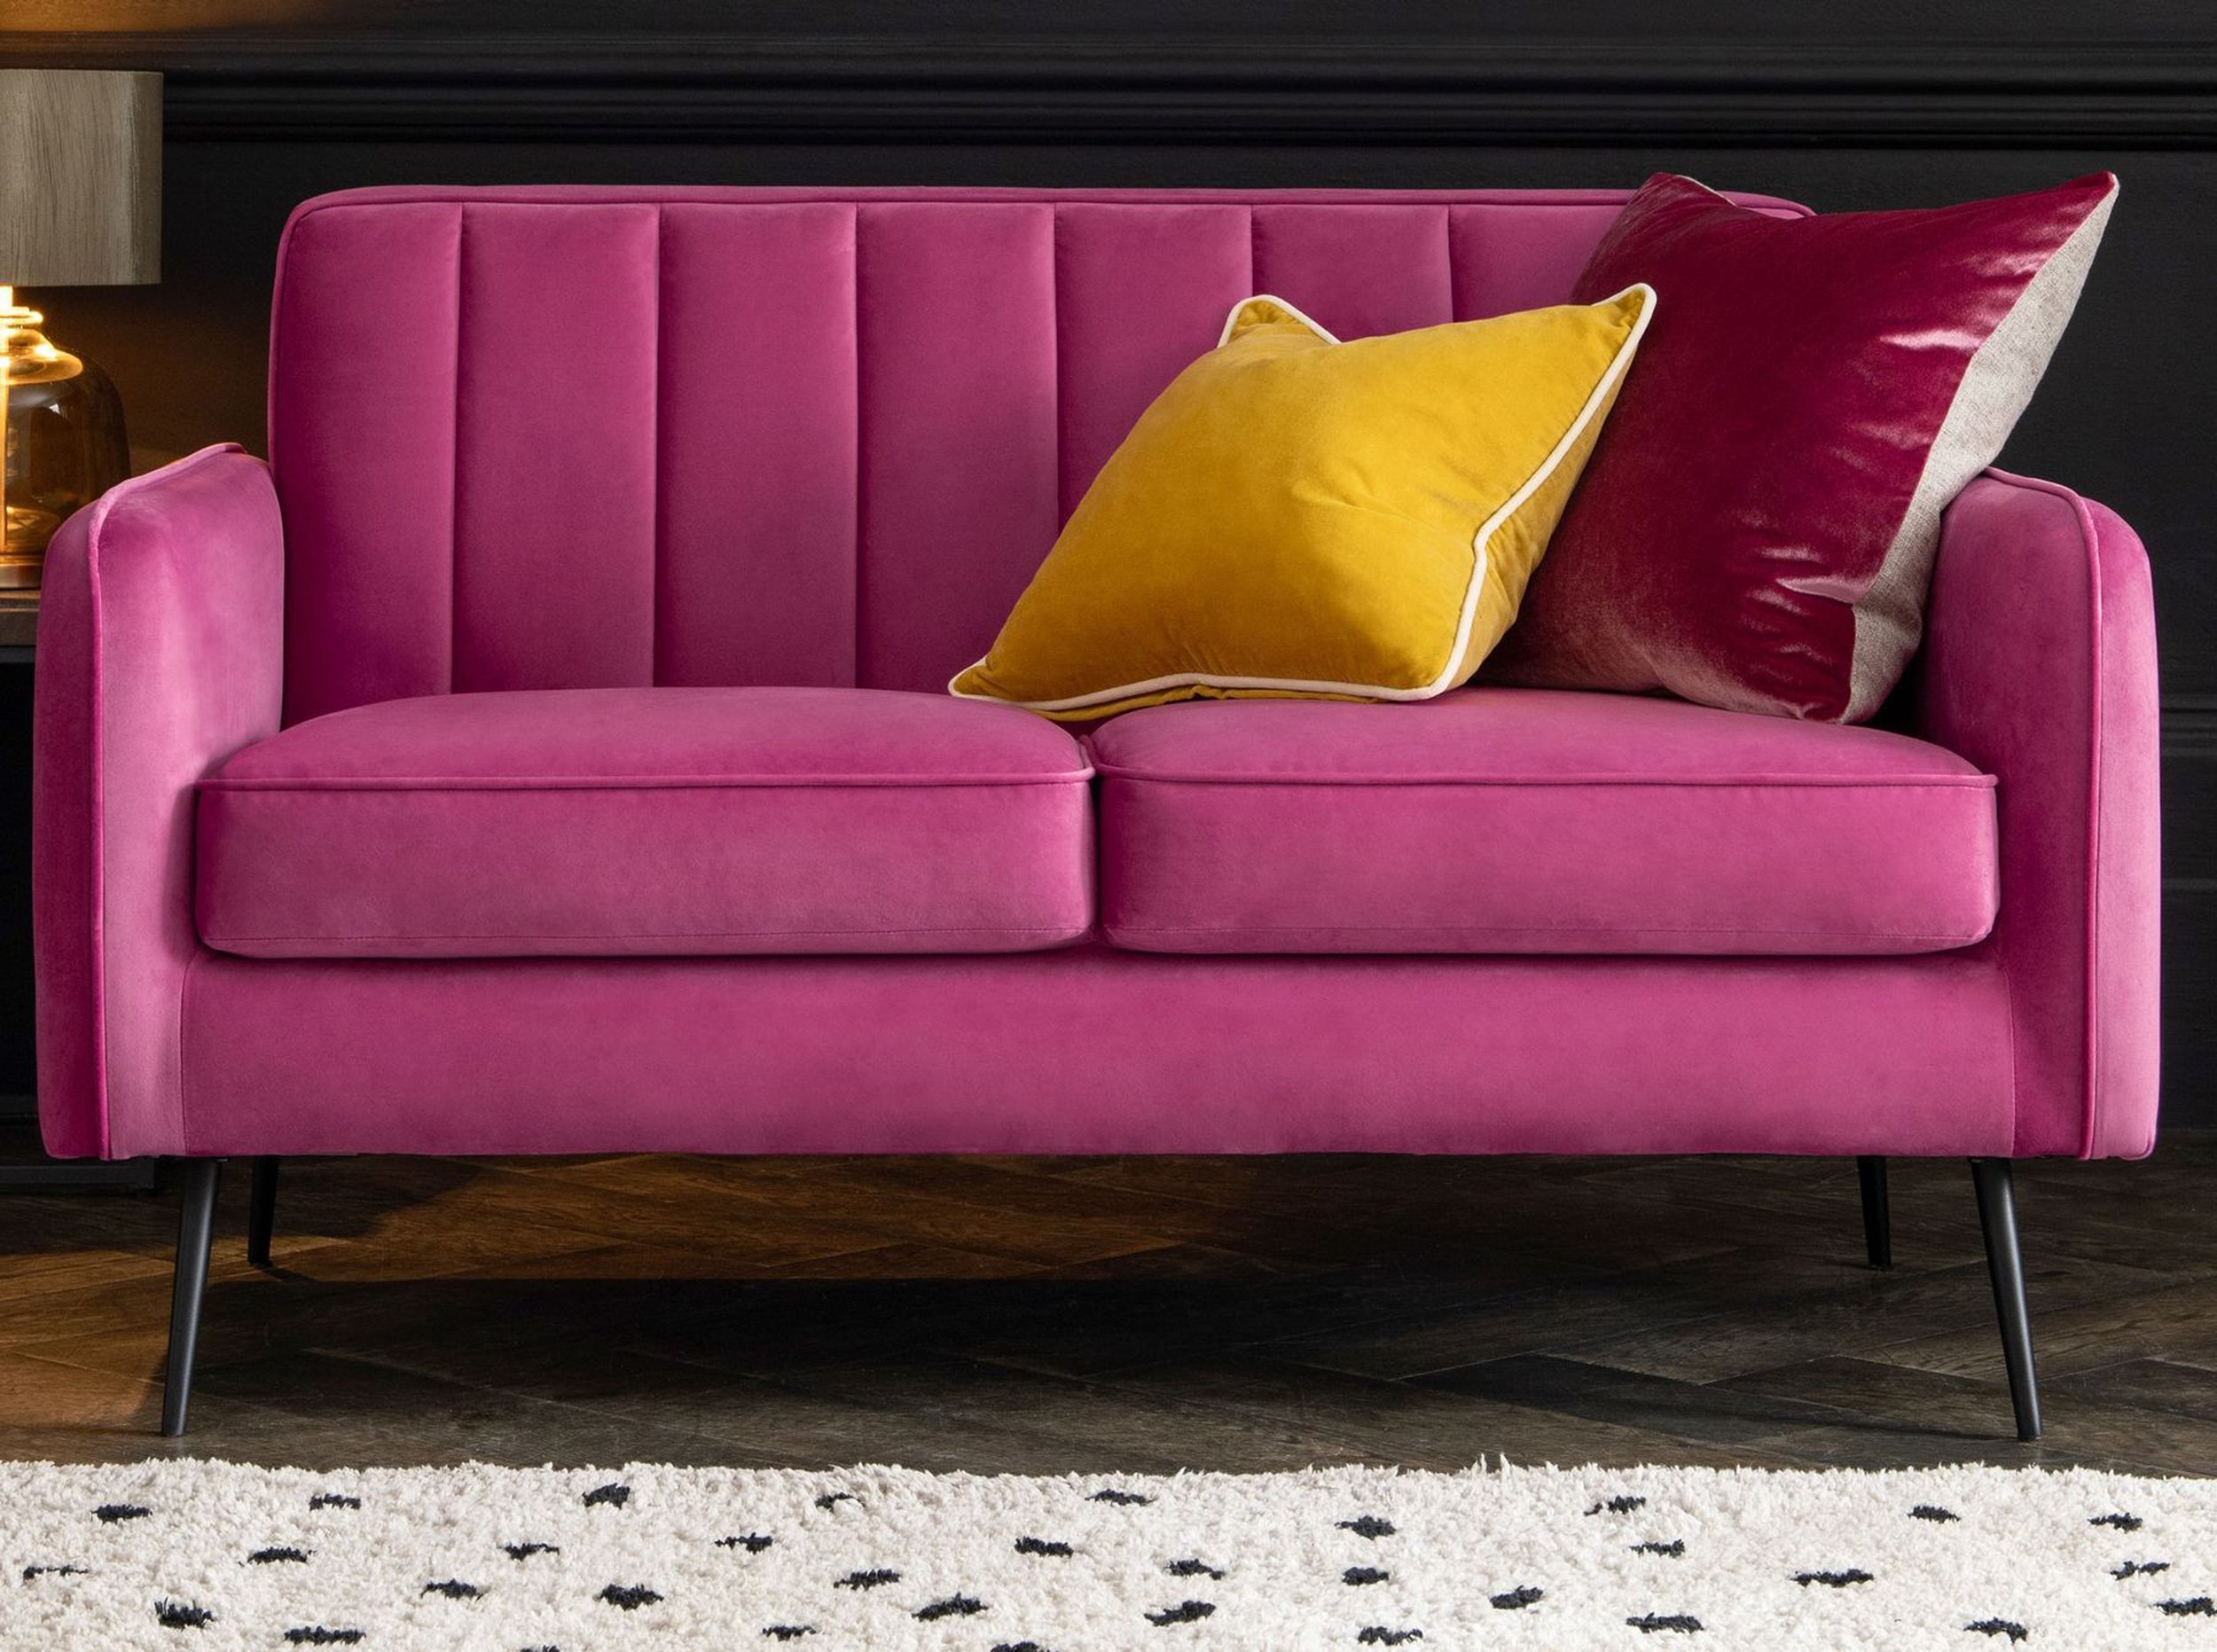 6. Paige 2 Seater ‘Sofa In A Box’ – Opulent Velvet Fuchsia Pink €550, 